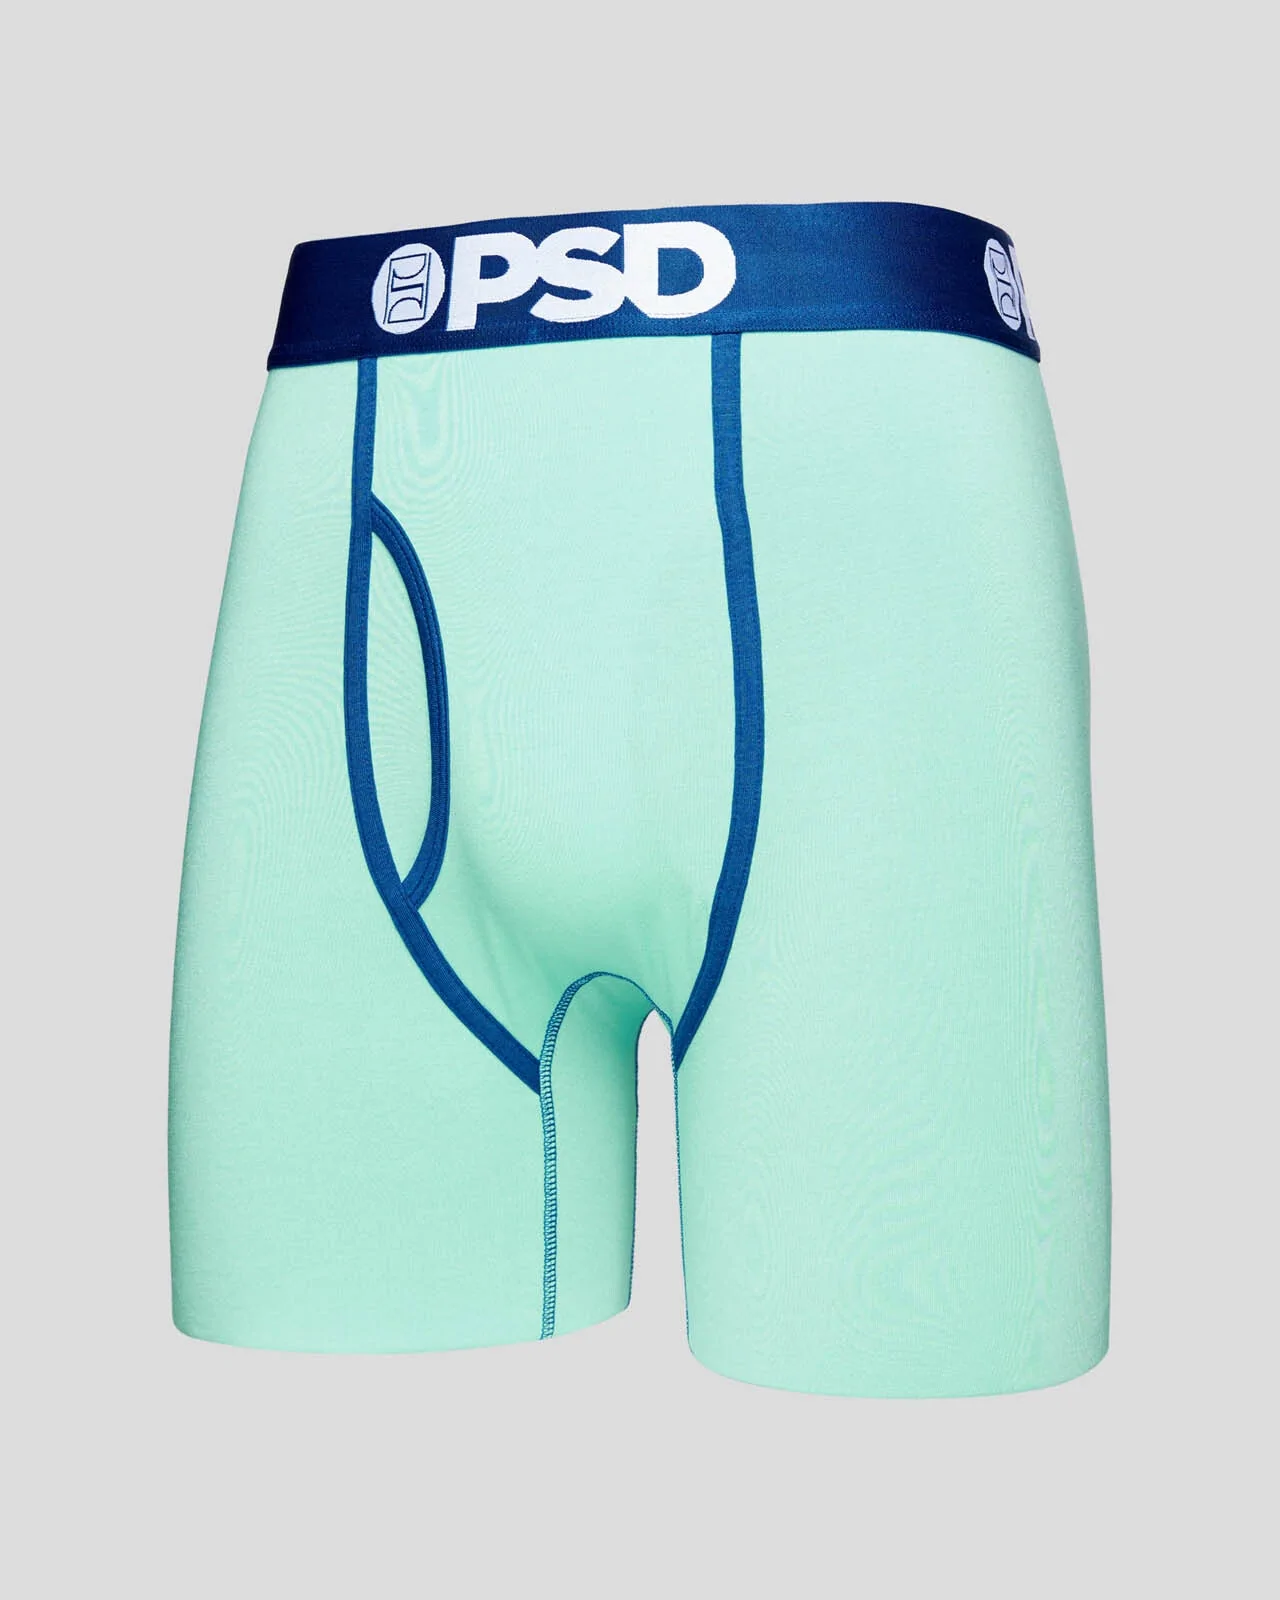 MODAL 3 PACK - Tropical - PSD Underwear